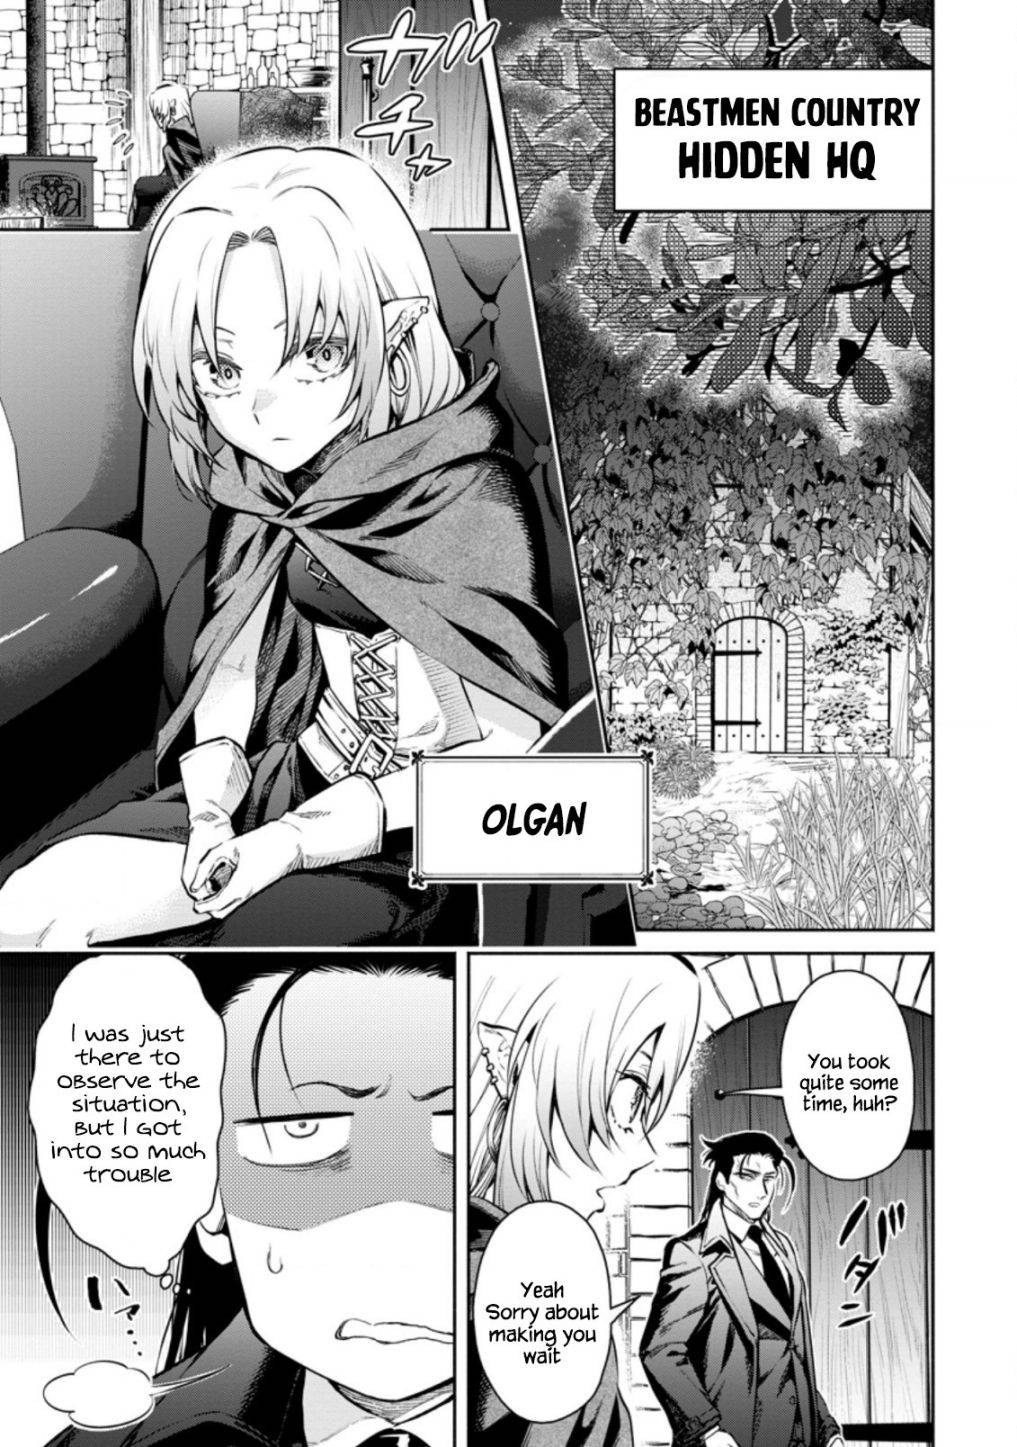 Read Maou-sama, Retry! R Manga English [New Chapters] Online Free -  MangaClash